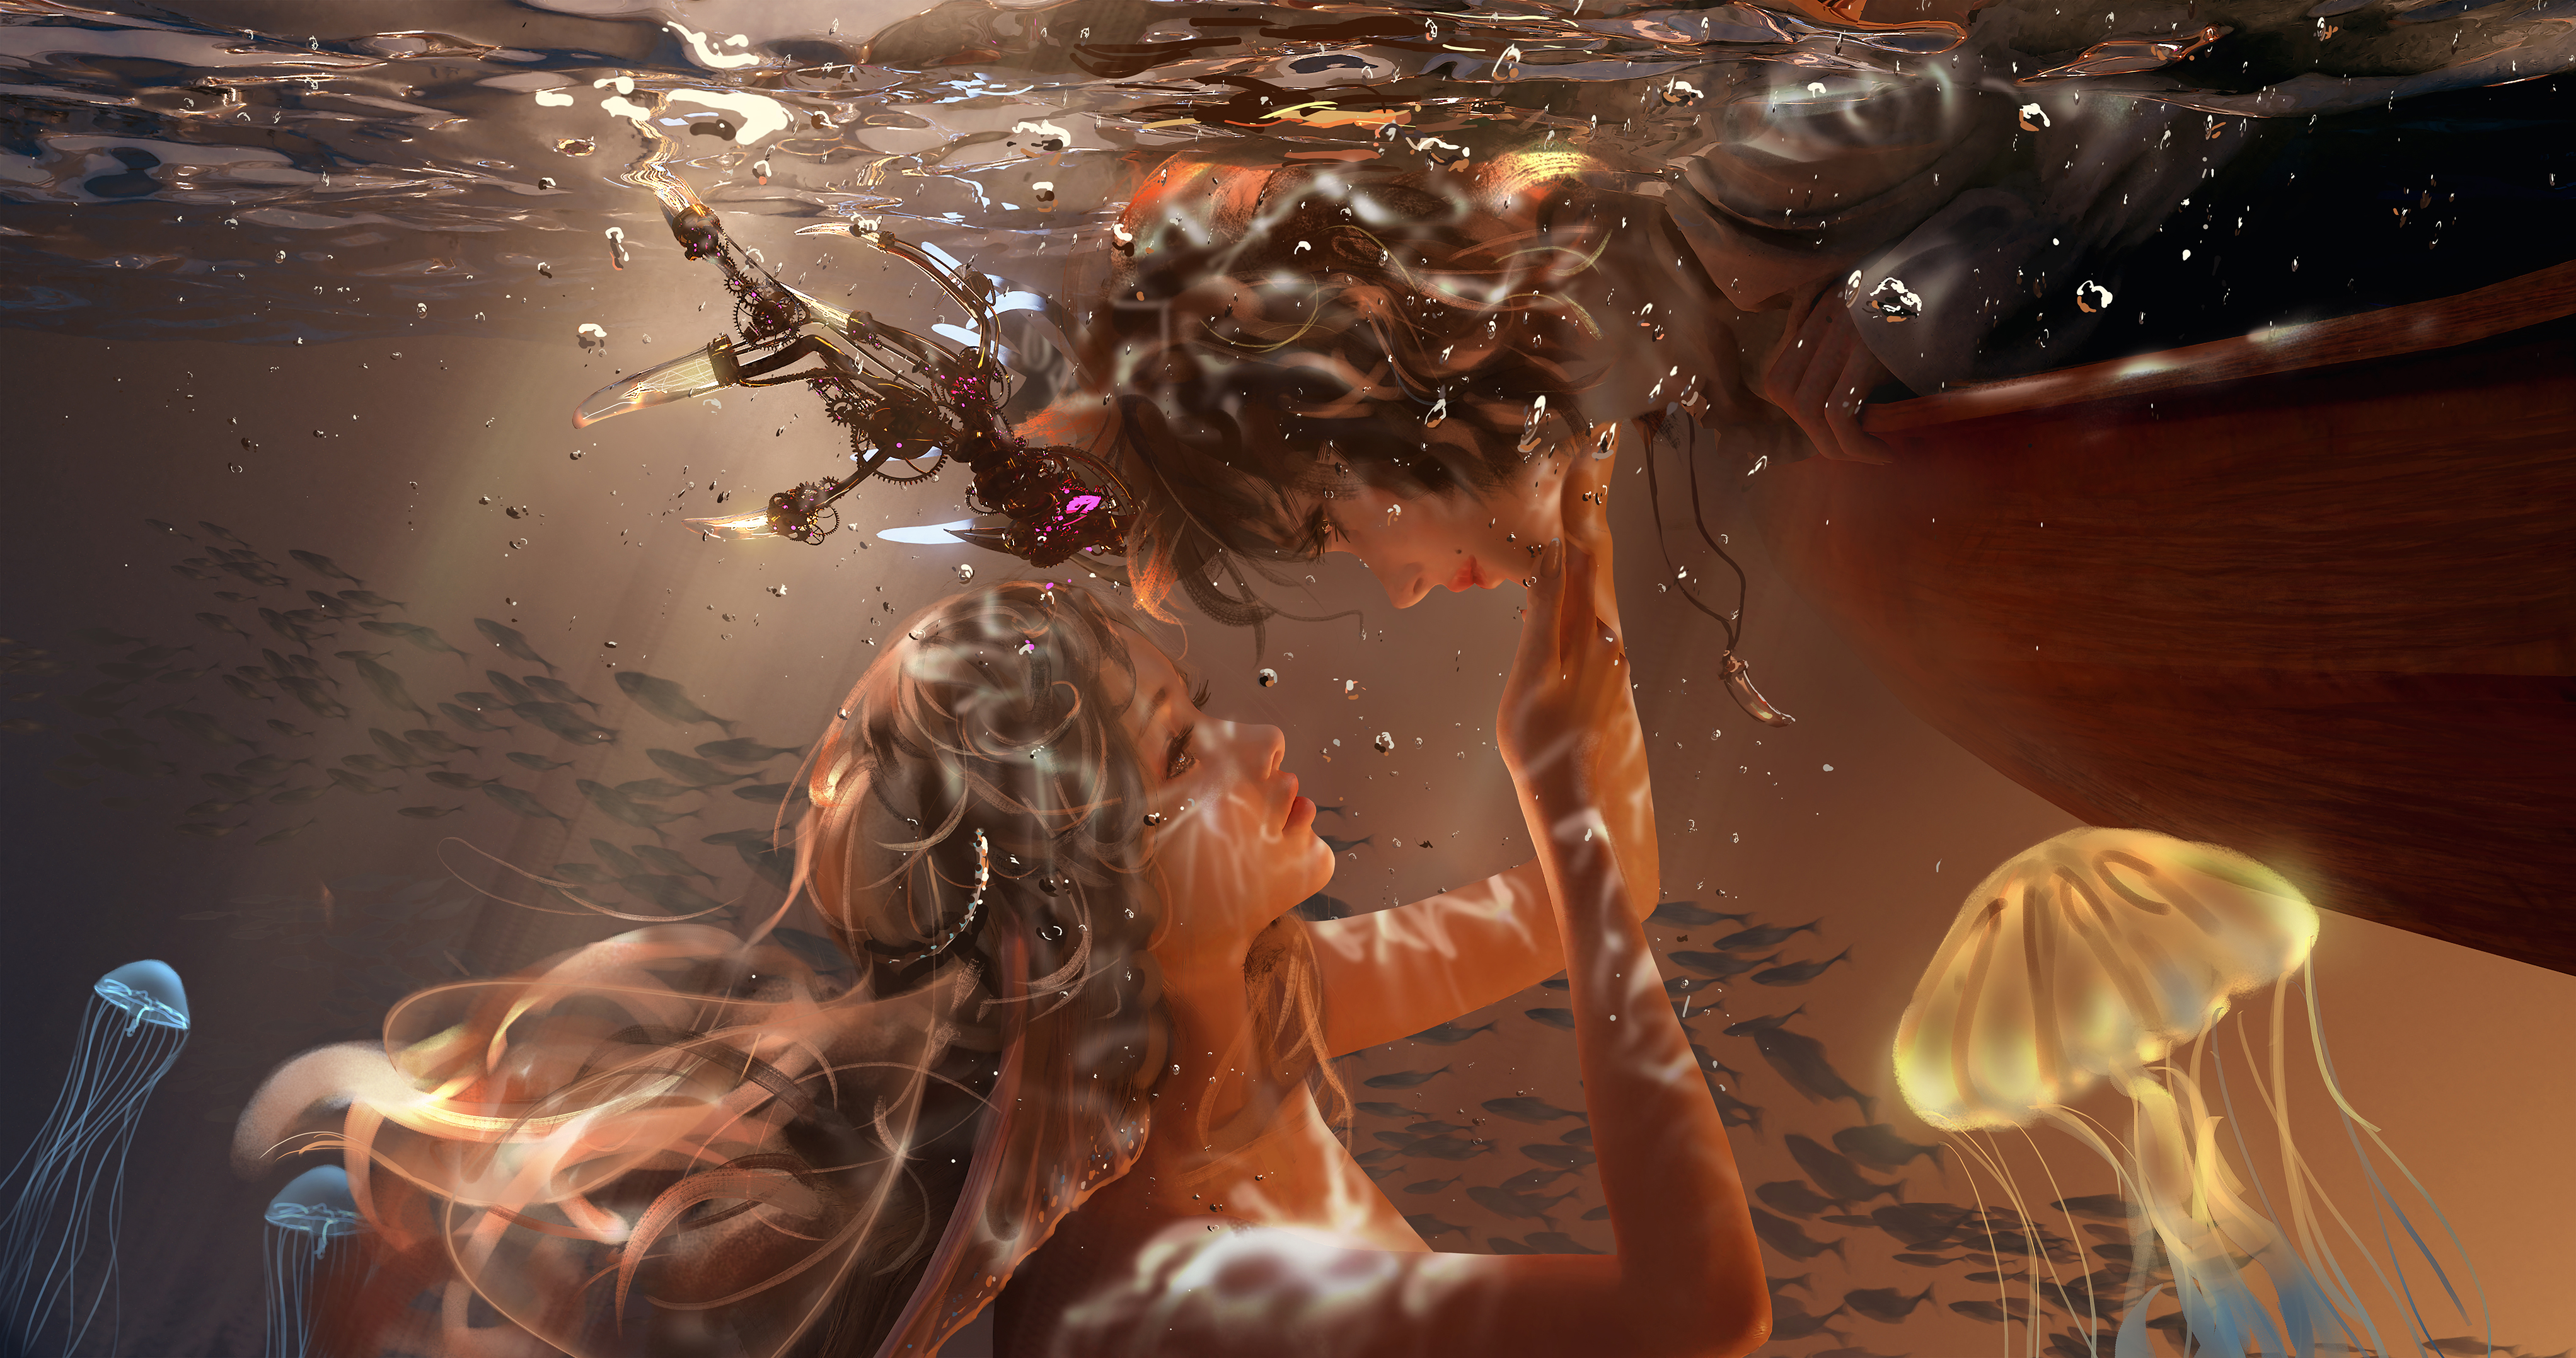 Anime 4087x2154 WLOP artwork women mermaids underwater jellyfish